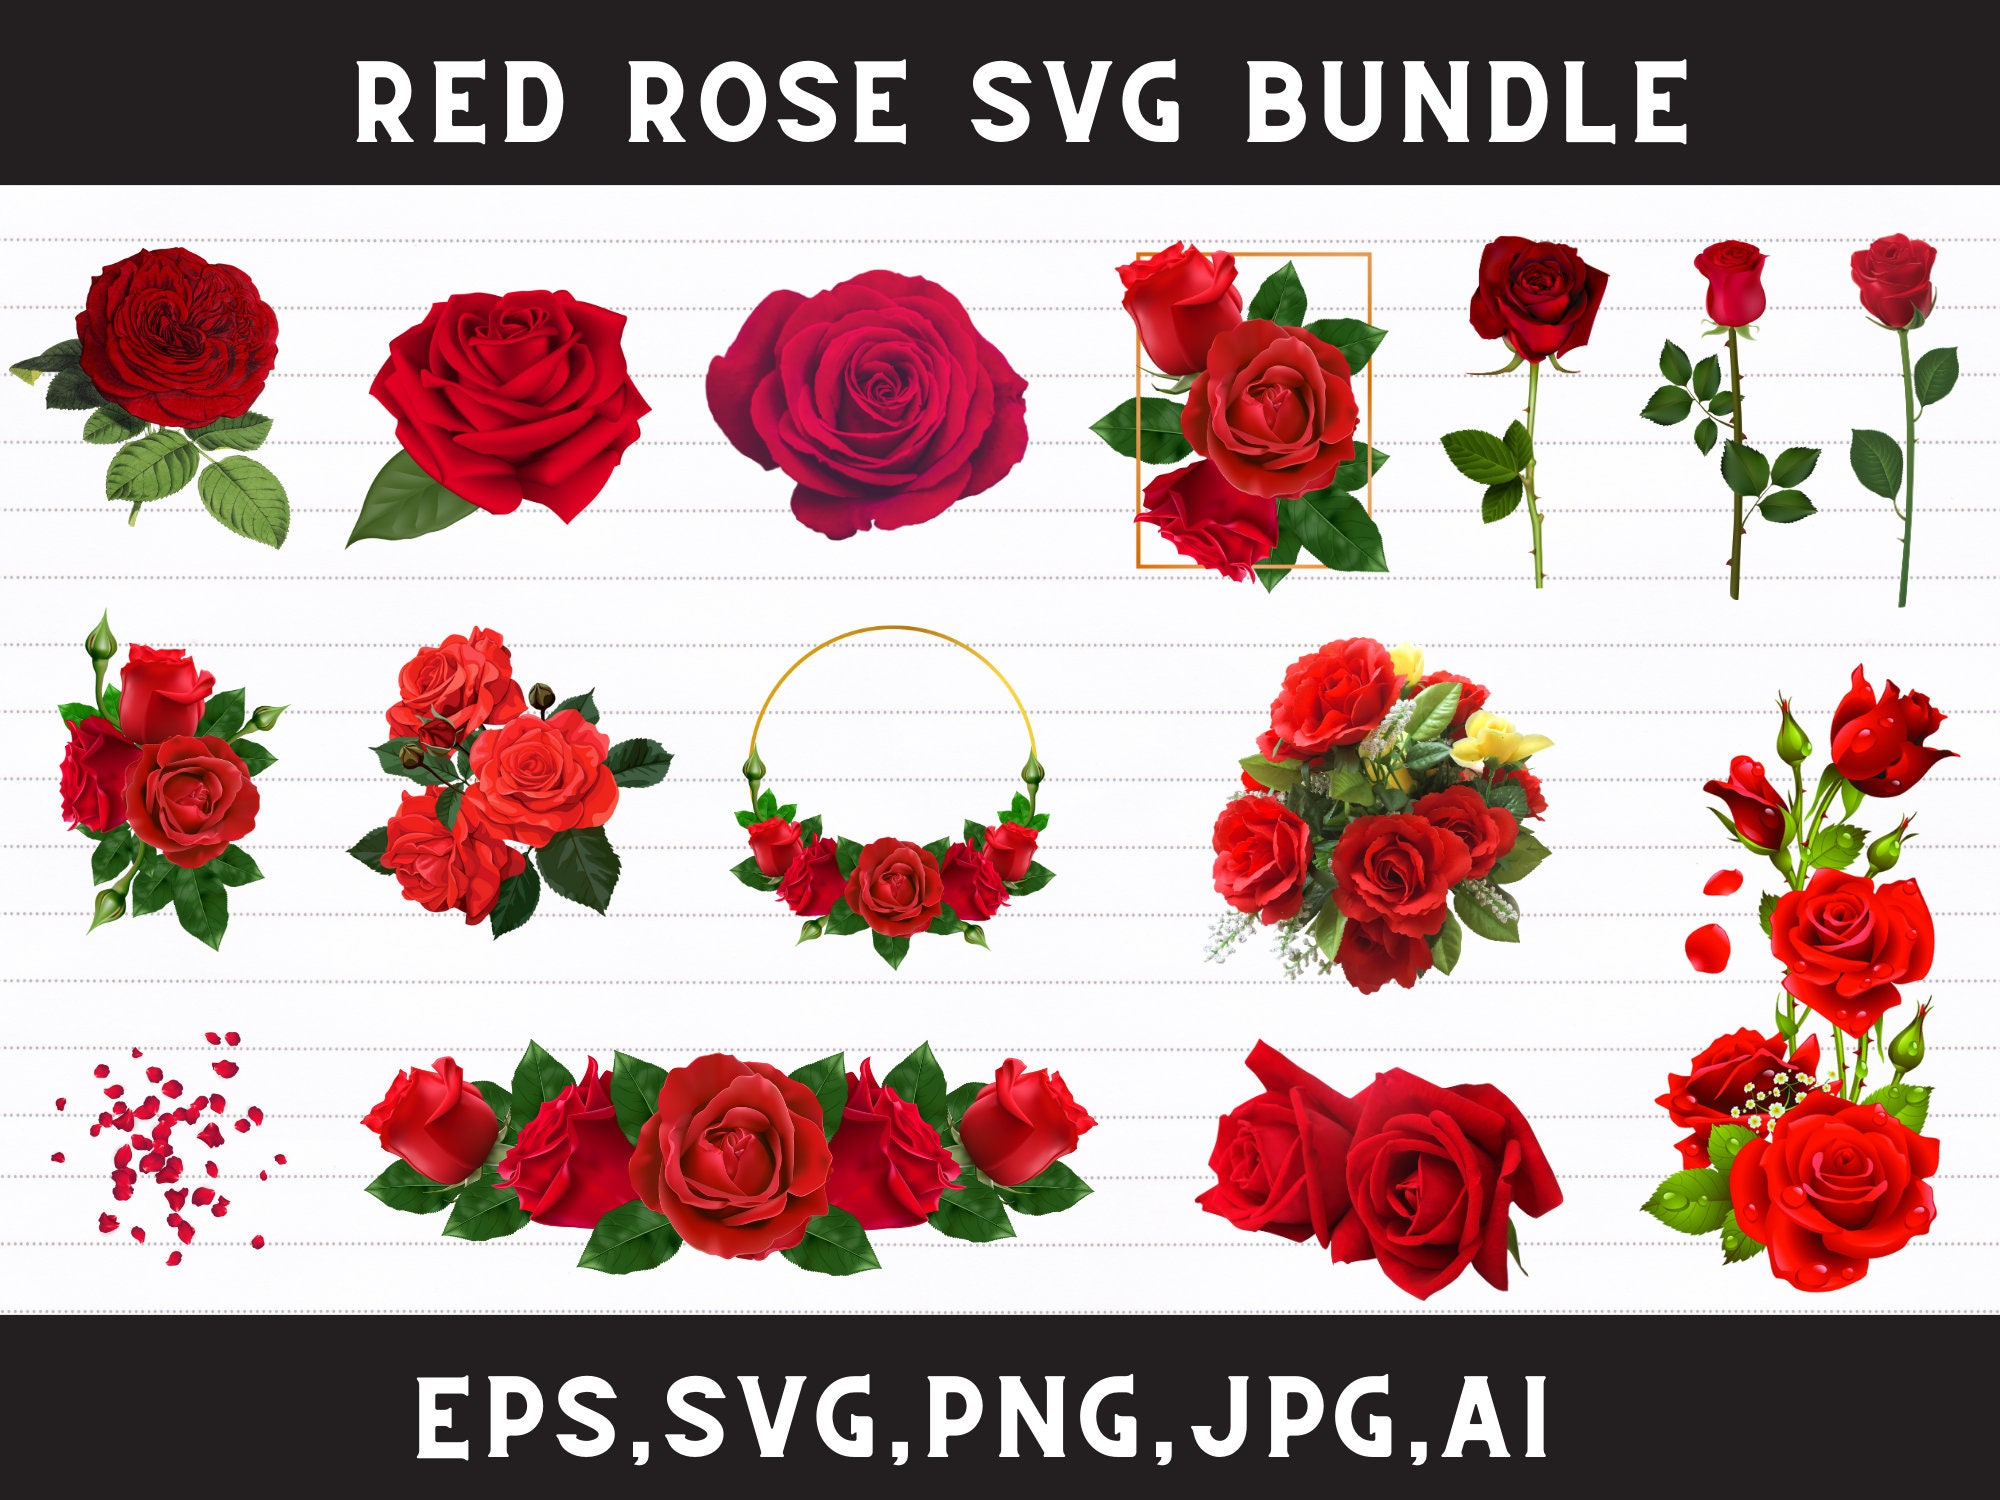 Roses SVG, Flower SVG, Rose Silhouette, SVG Cut Files - Crella